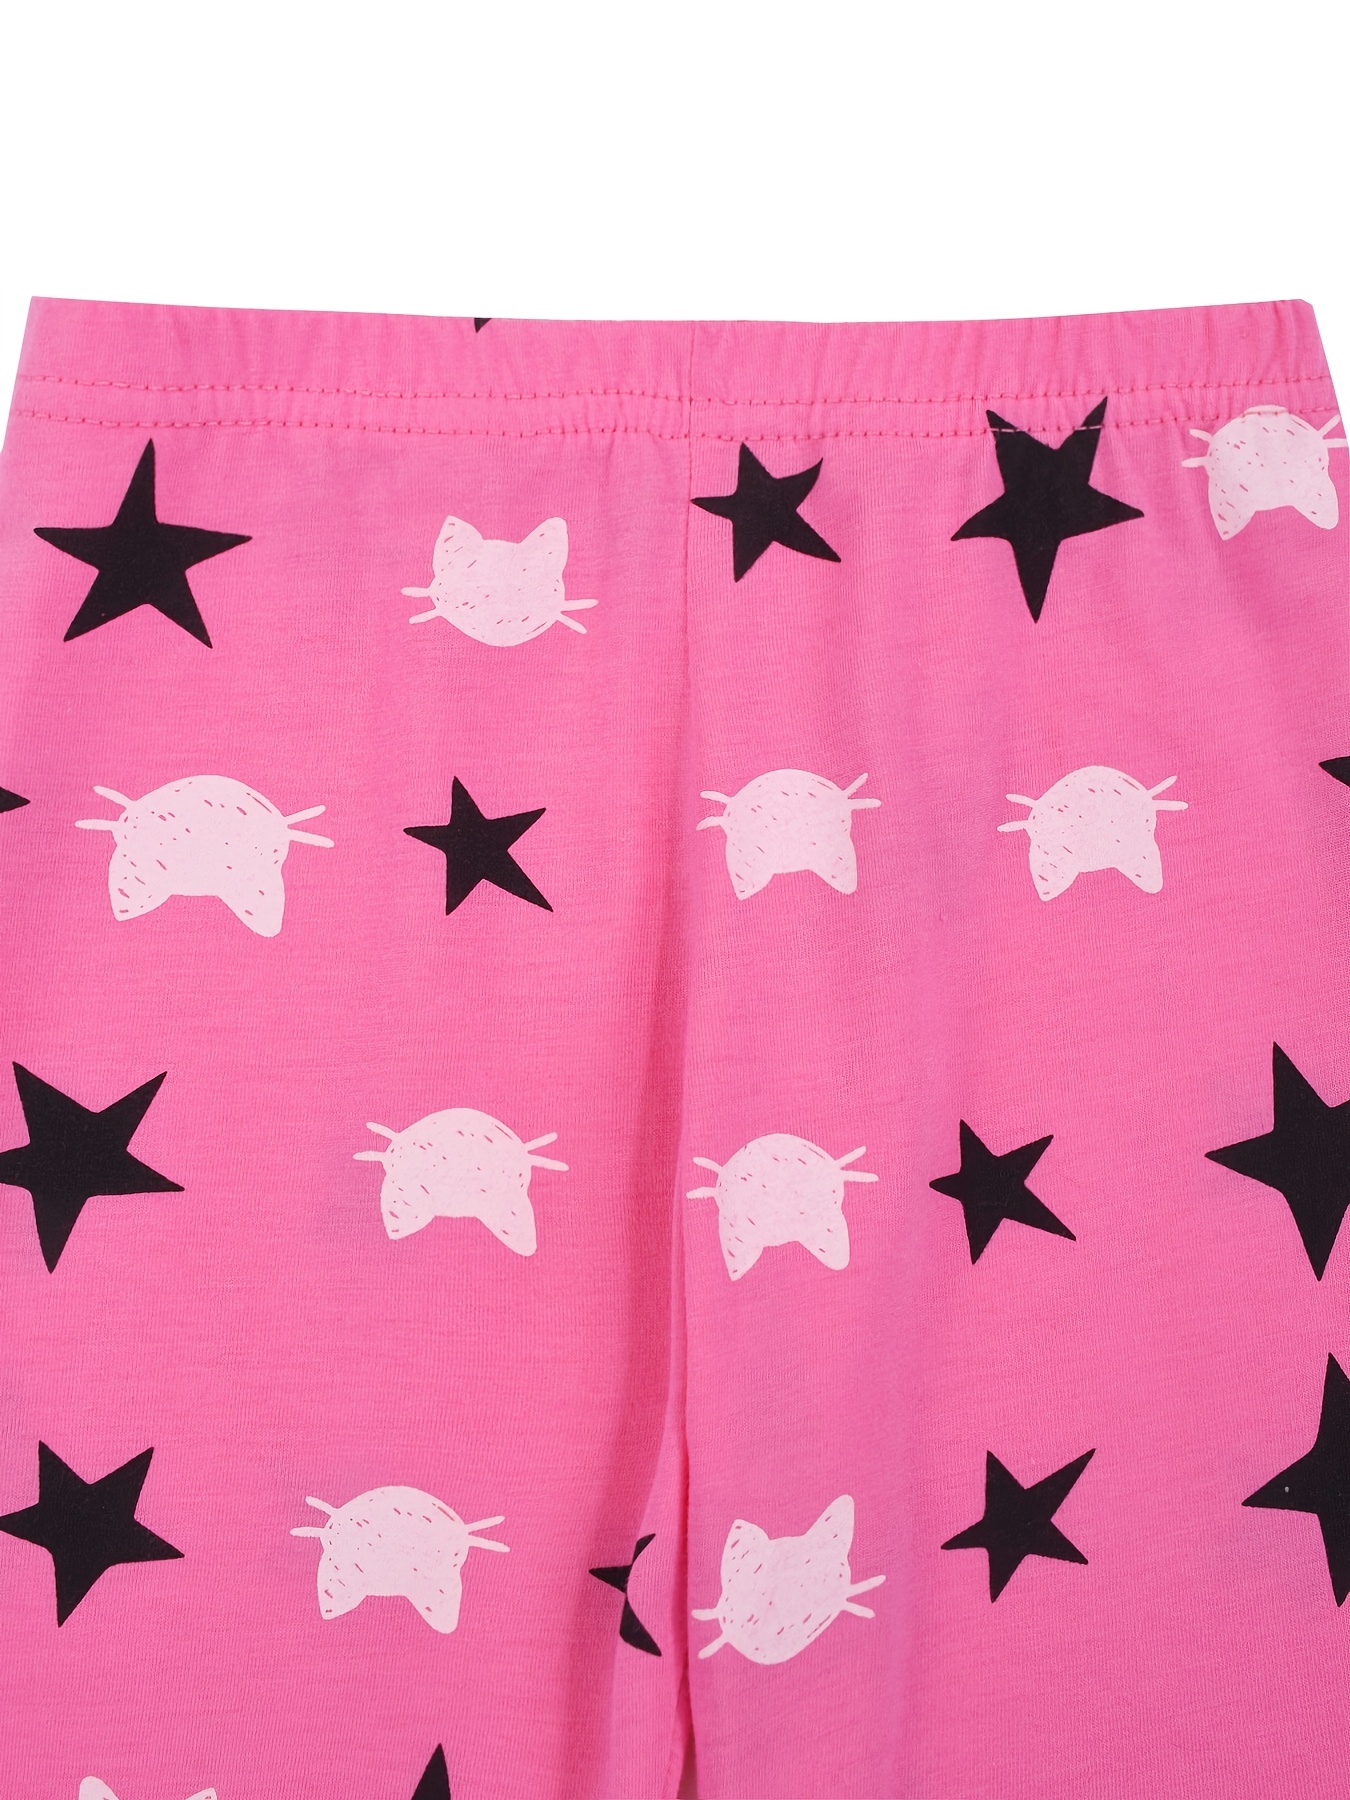 For Kids Girls Cartoon Boxer Cocomelon Briefs Pants Comfy Shorts